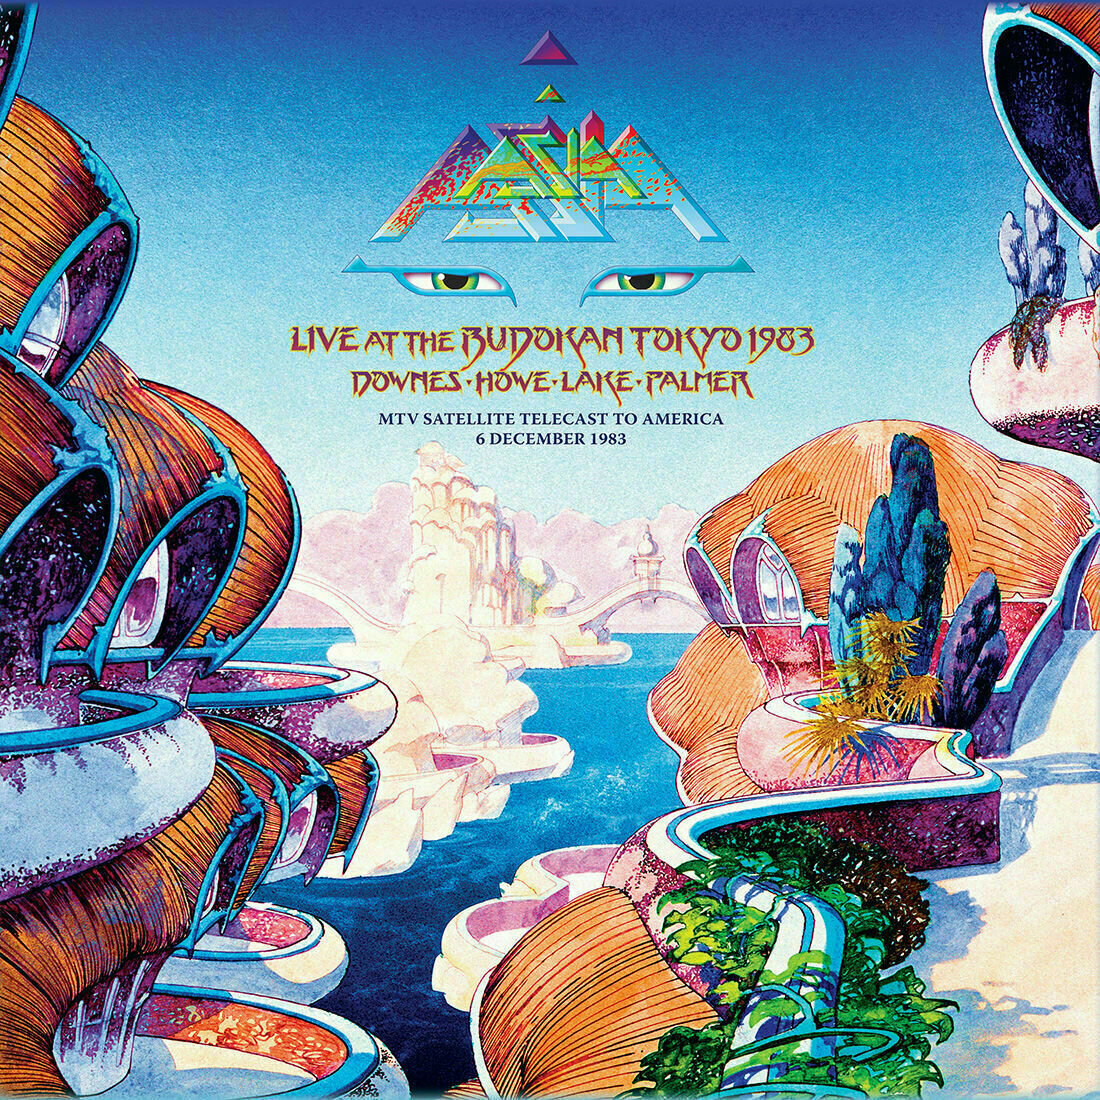 Vinylplade Asia - Asia In Asia - Live At The Budokan, Tokyo, 1983 (2 LP)